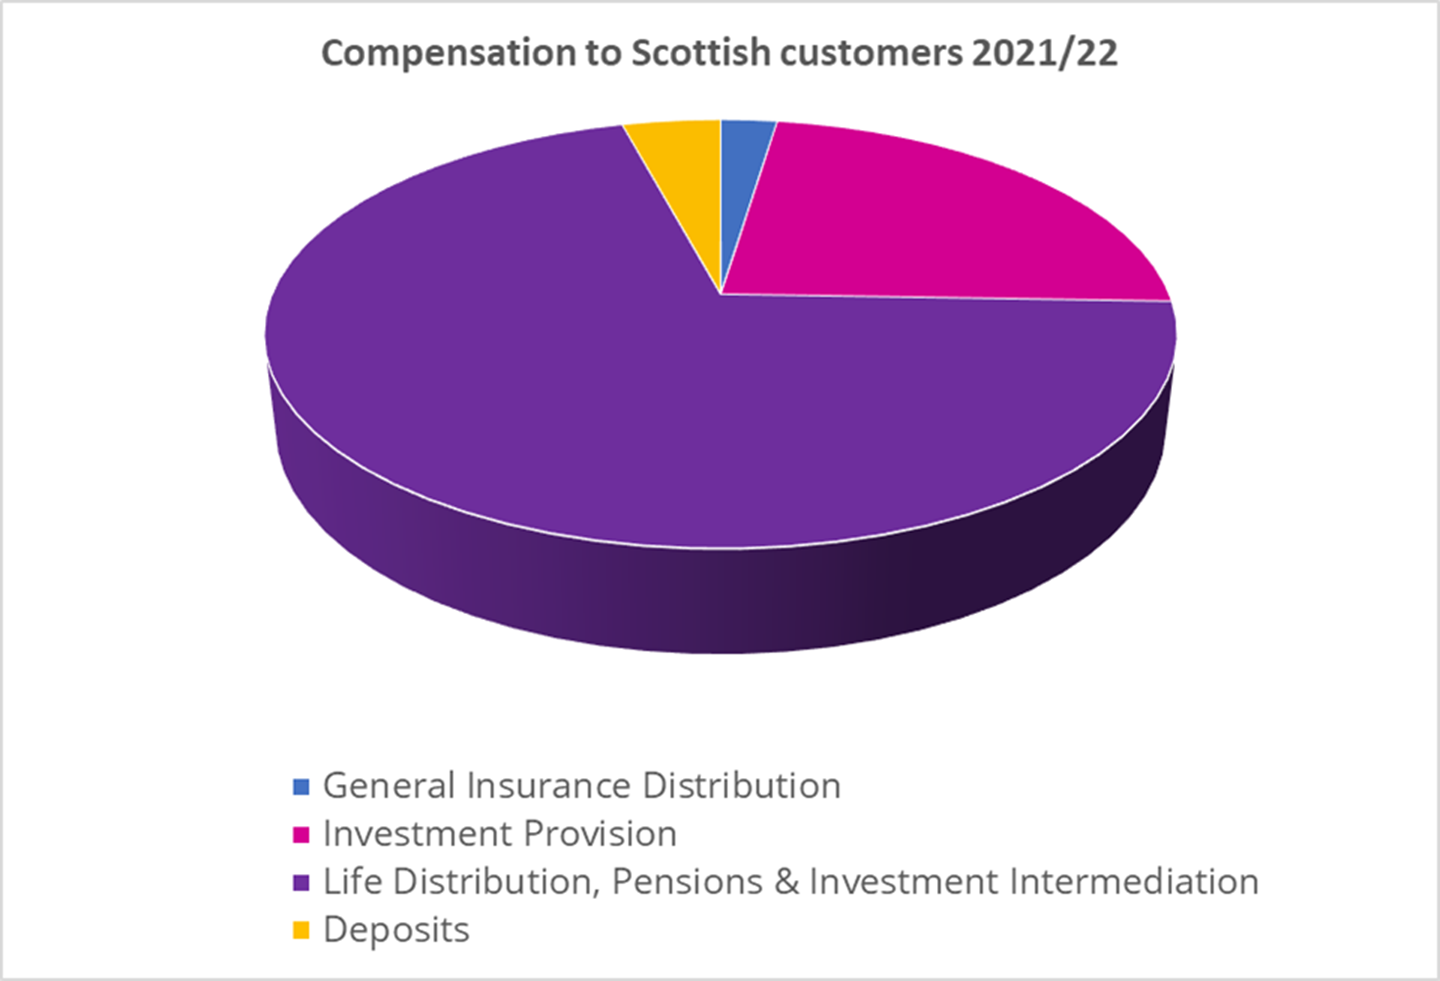 Compensation to Scottish customers pie chart